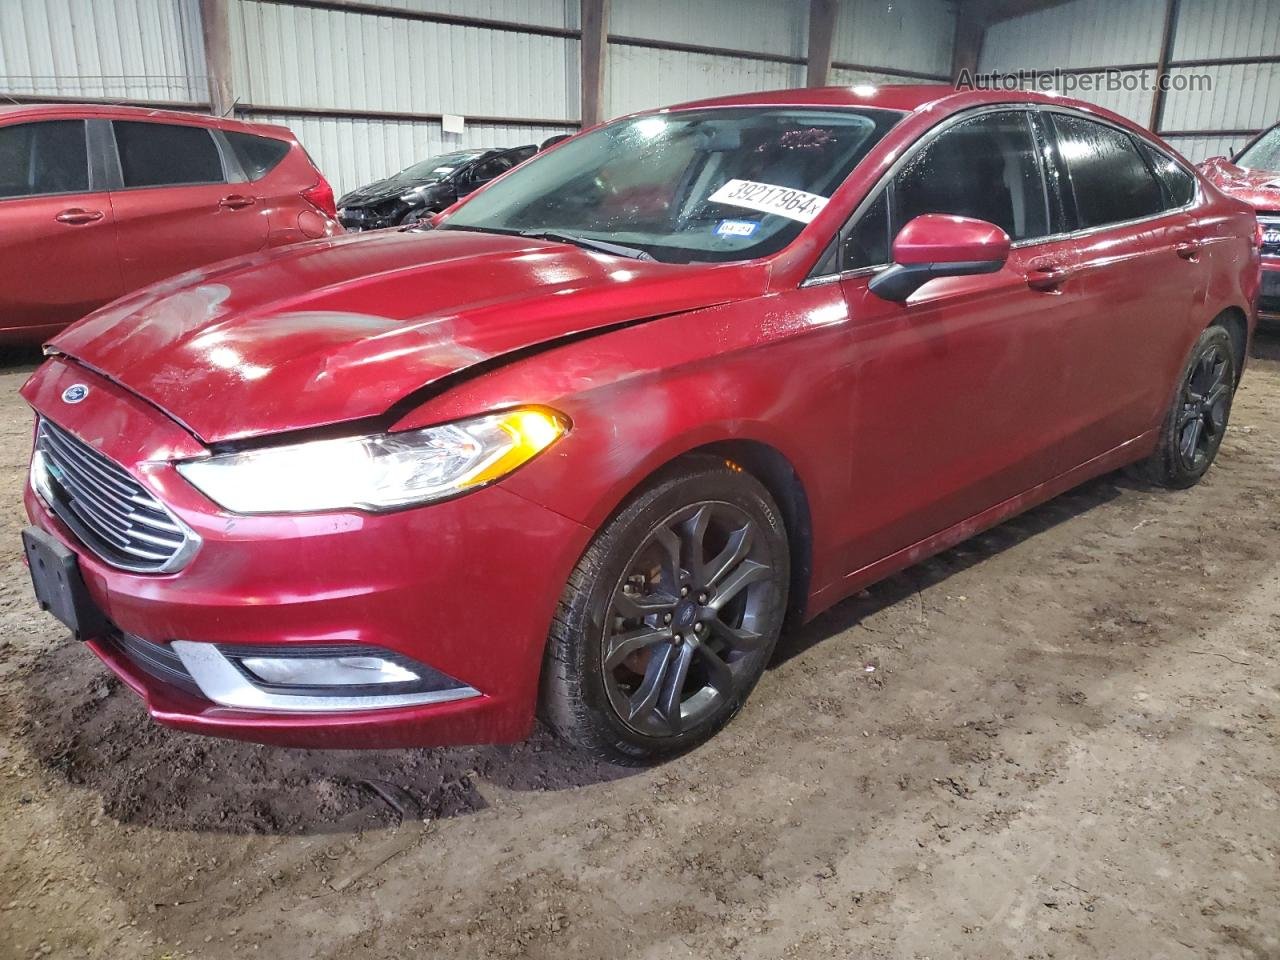 2018 Ford Fusion Se Red vin: 3FA6P0H72JR225311